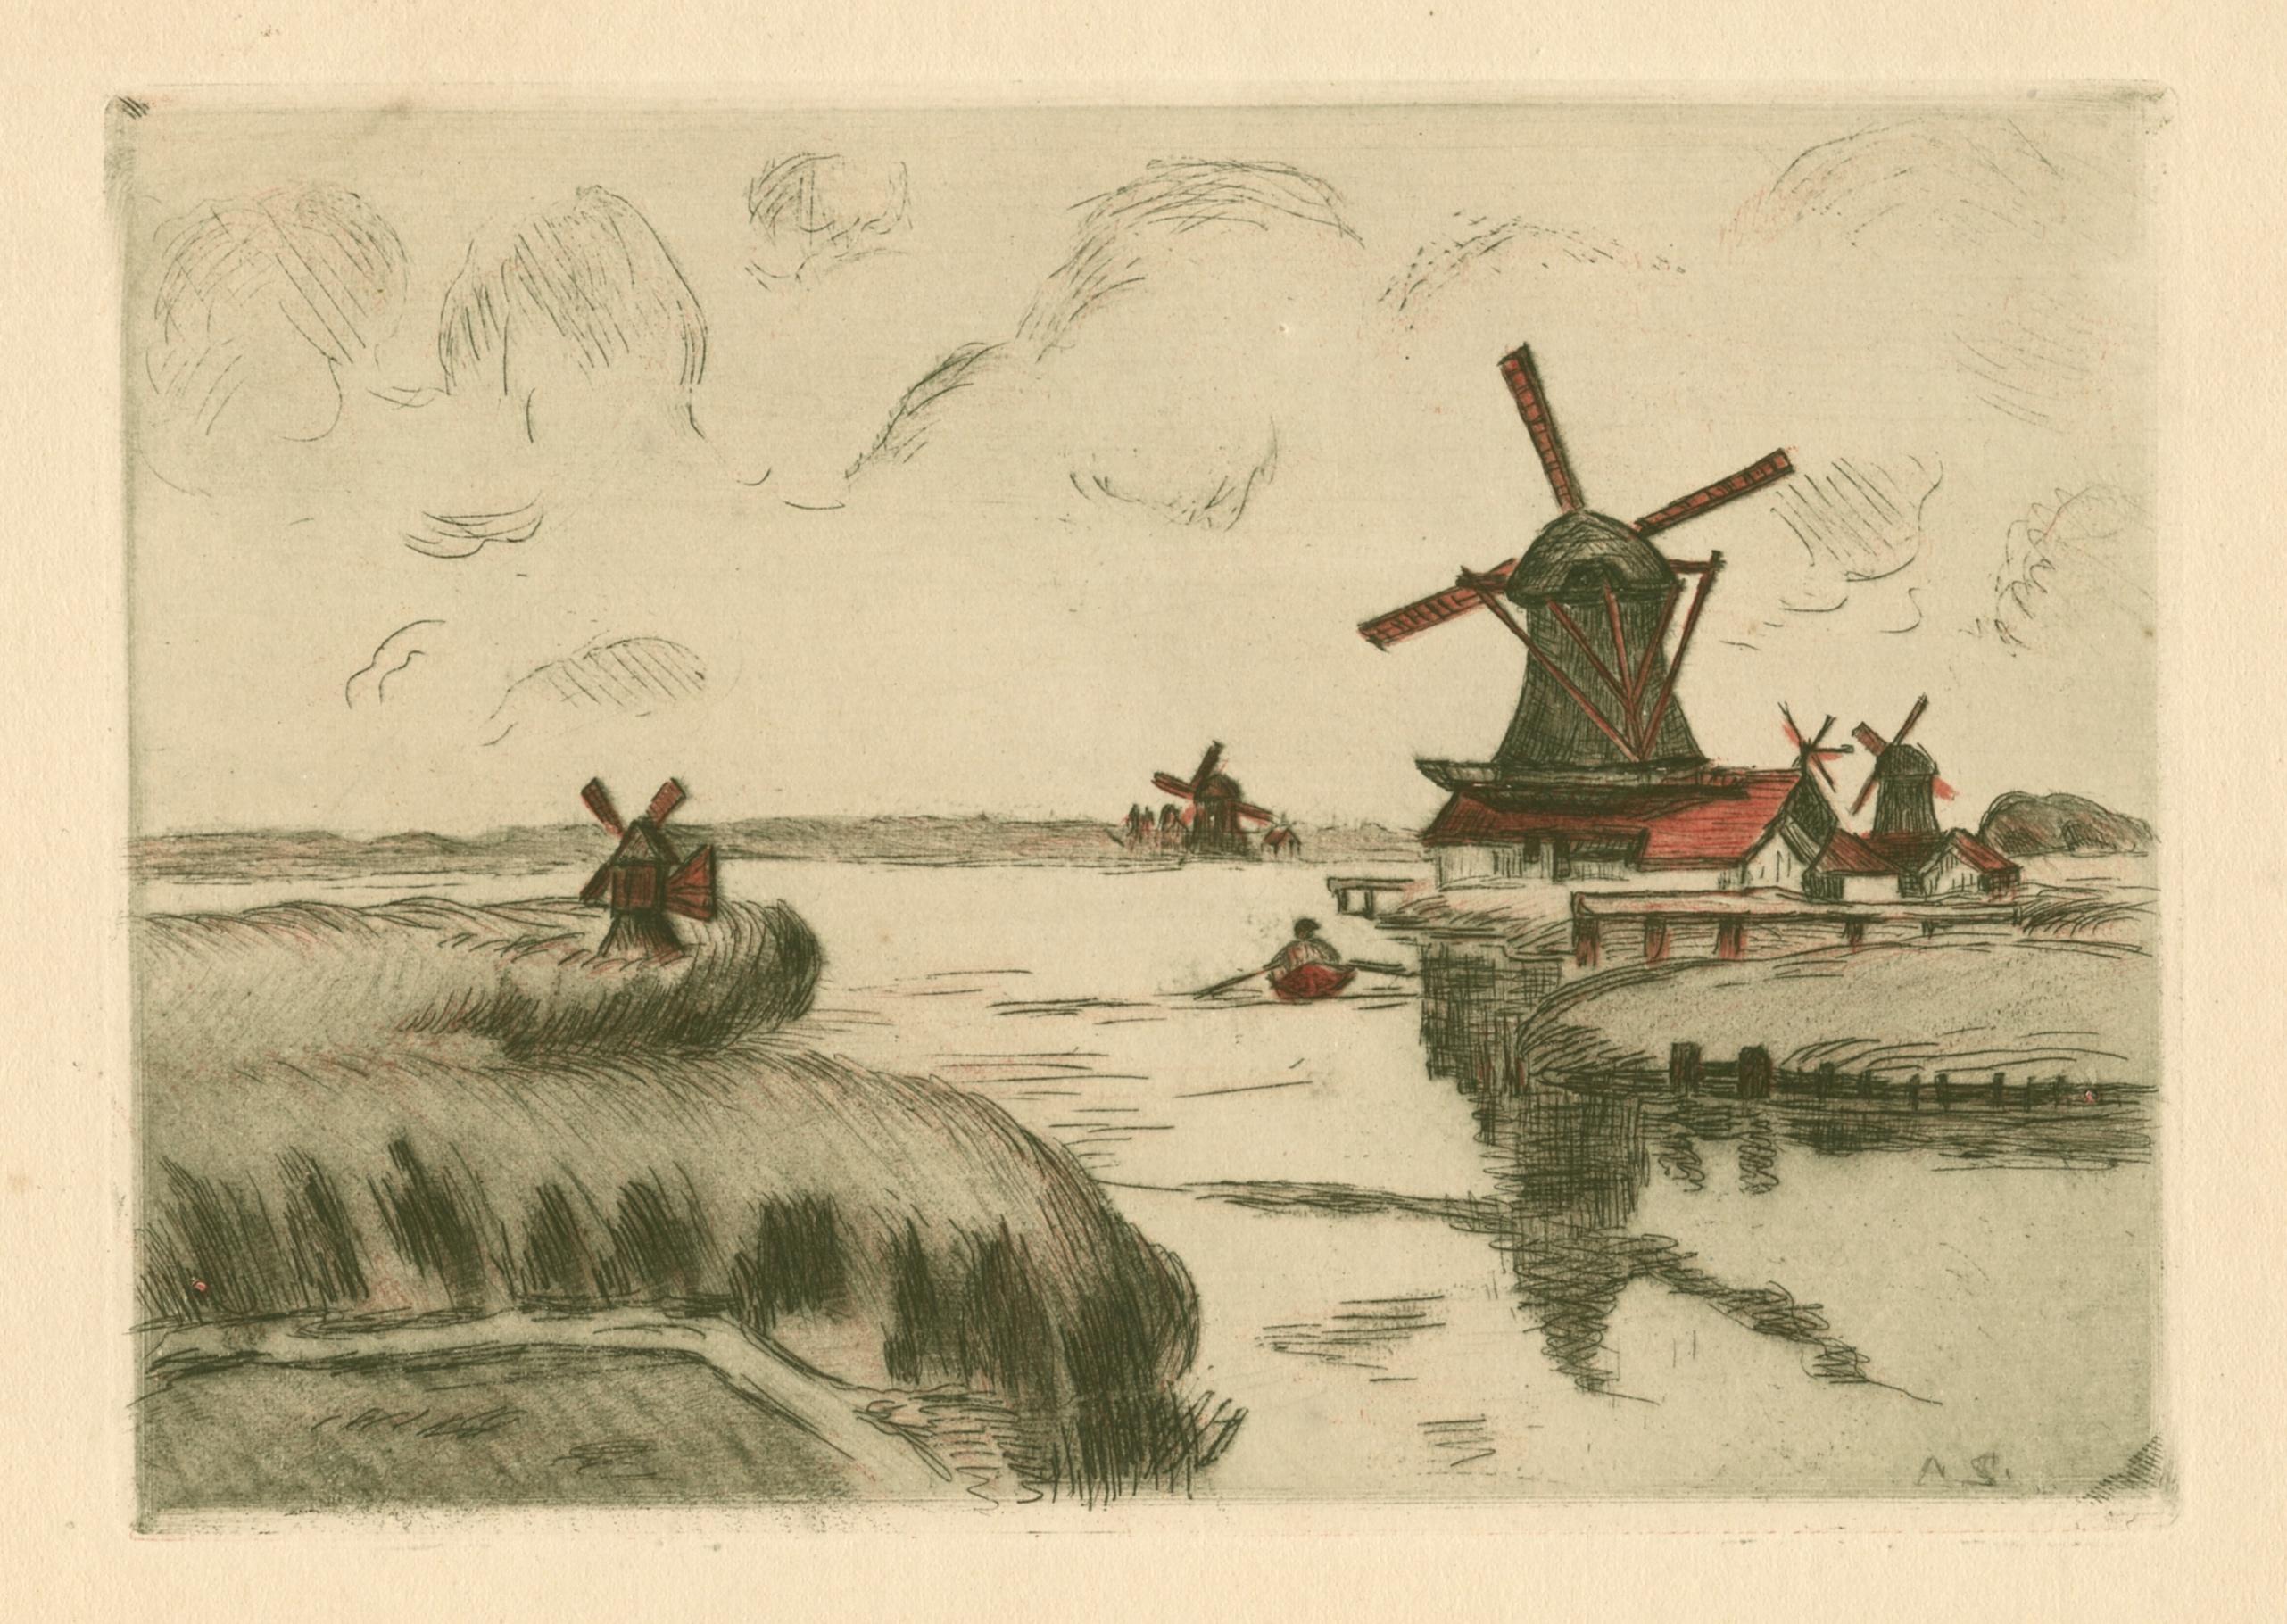 Armand Guillaumin Landscape Print - "Vue prise de Saardam" (Zaandam) original etching